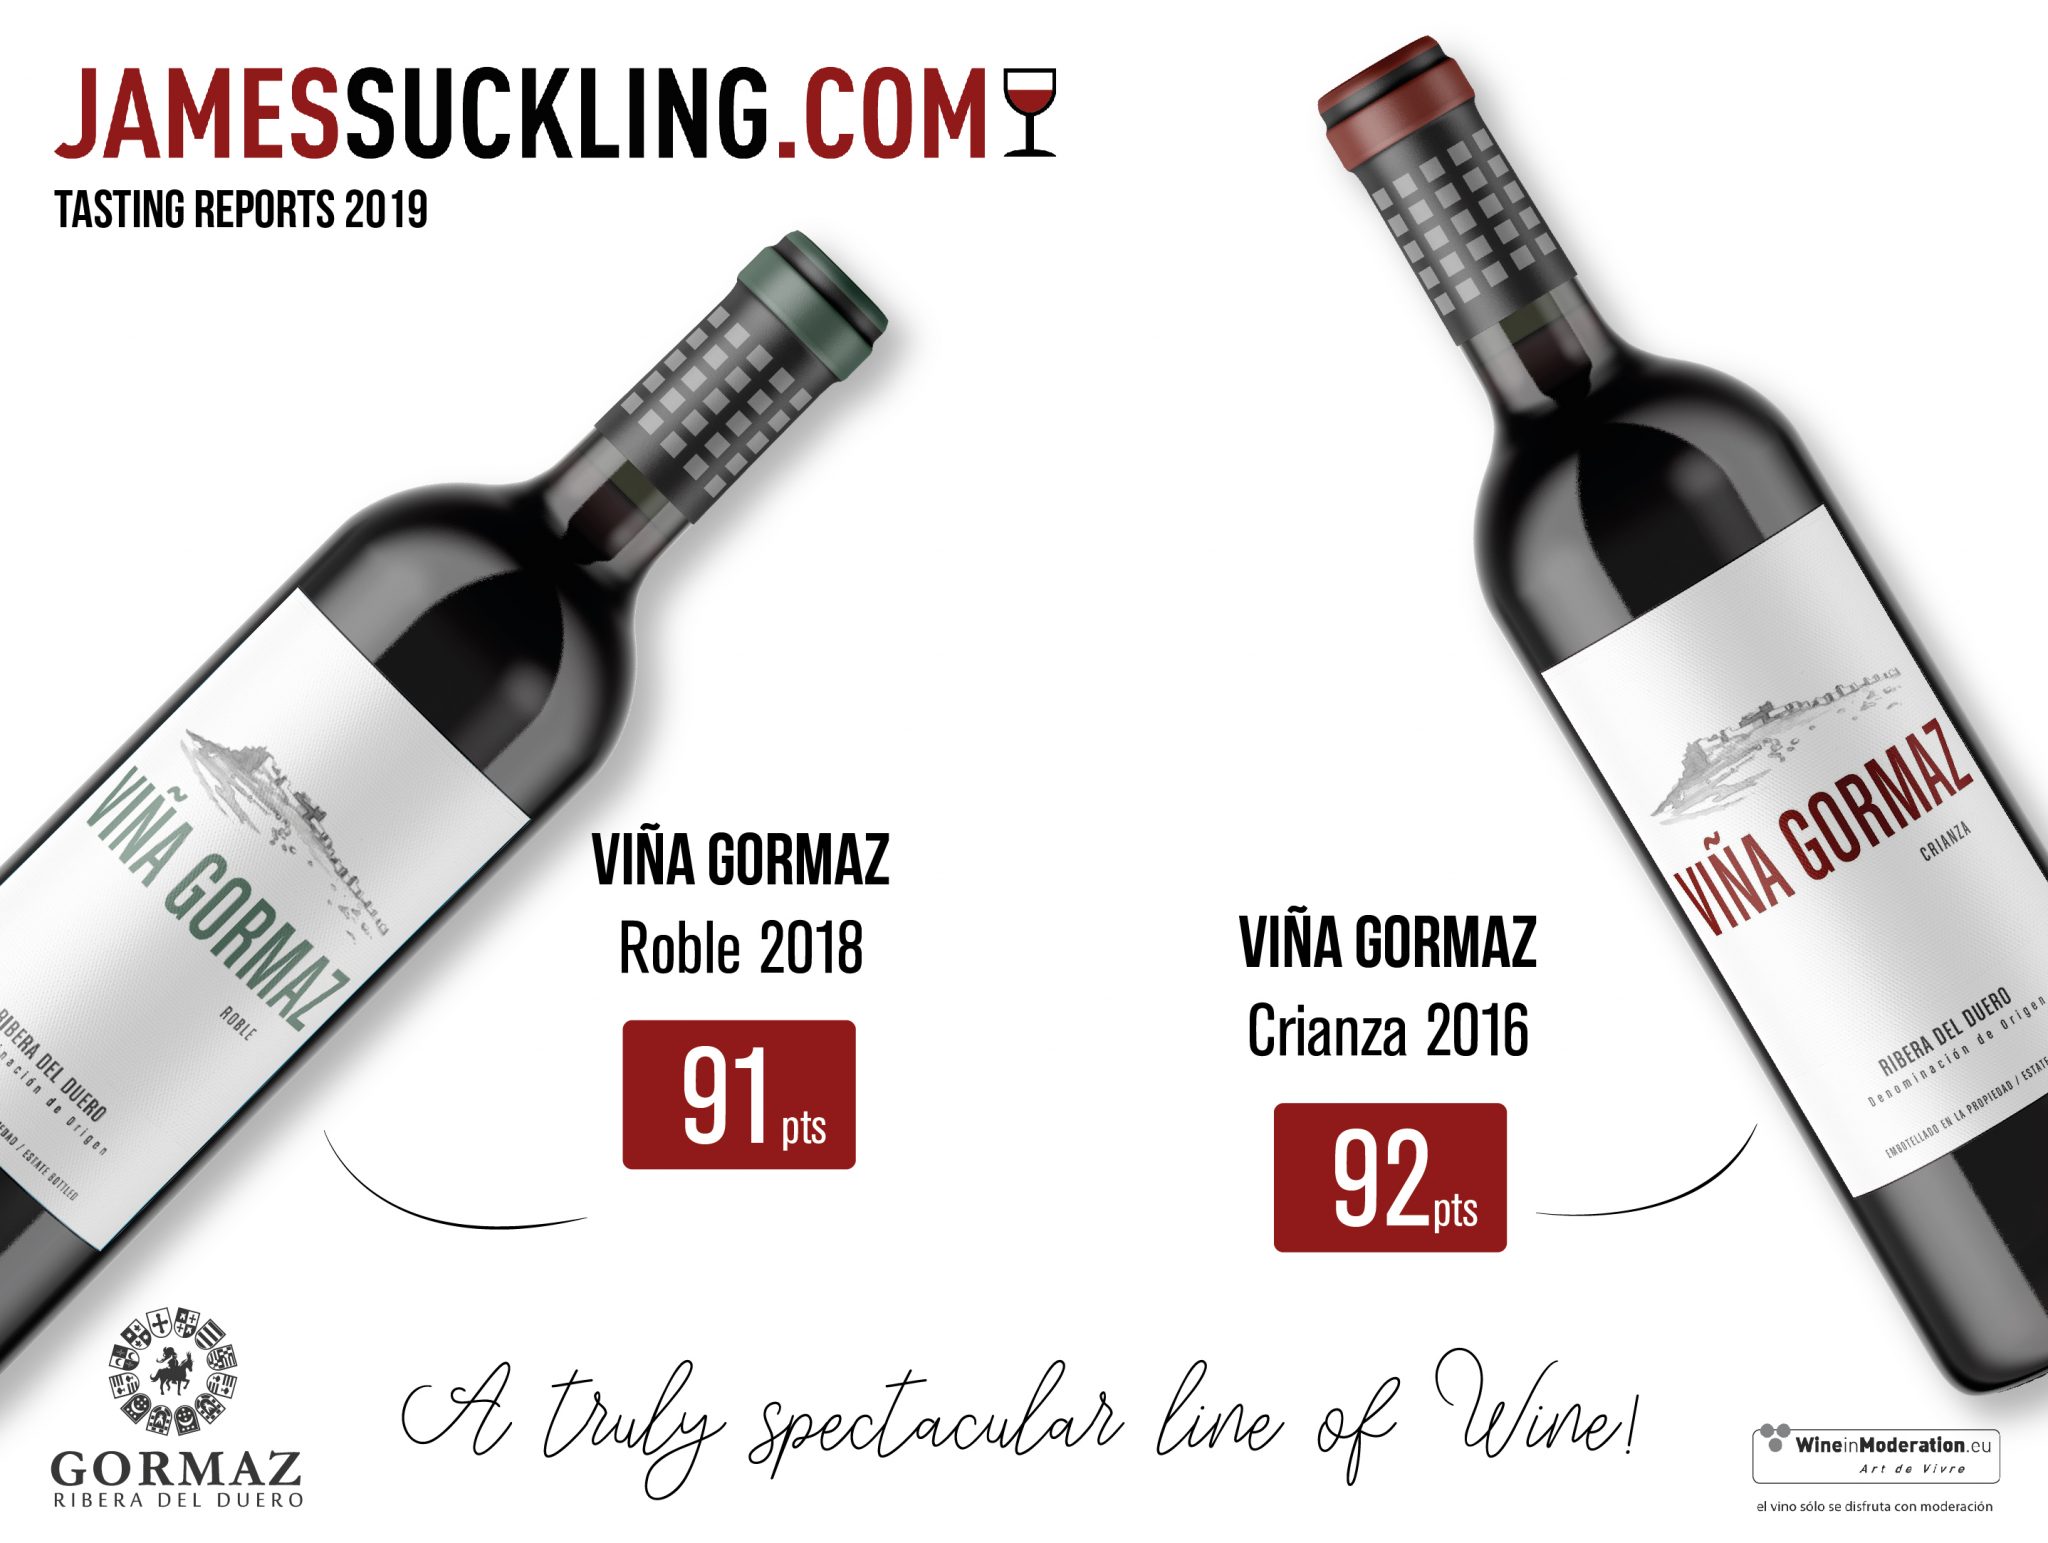 viña-gormaz-vino-premiadso-ribera-del-duero-james-suckling